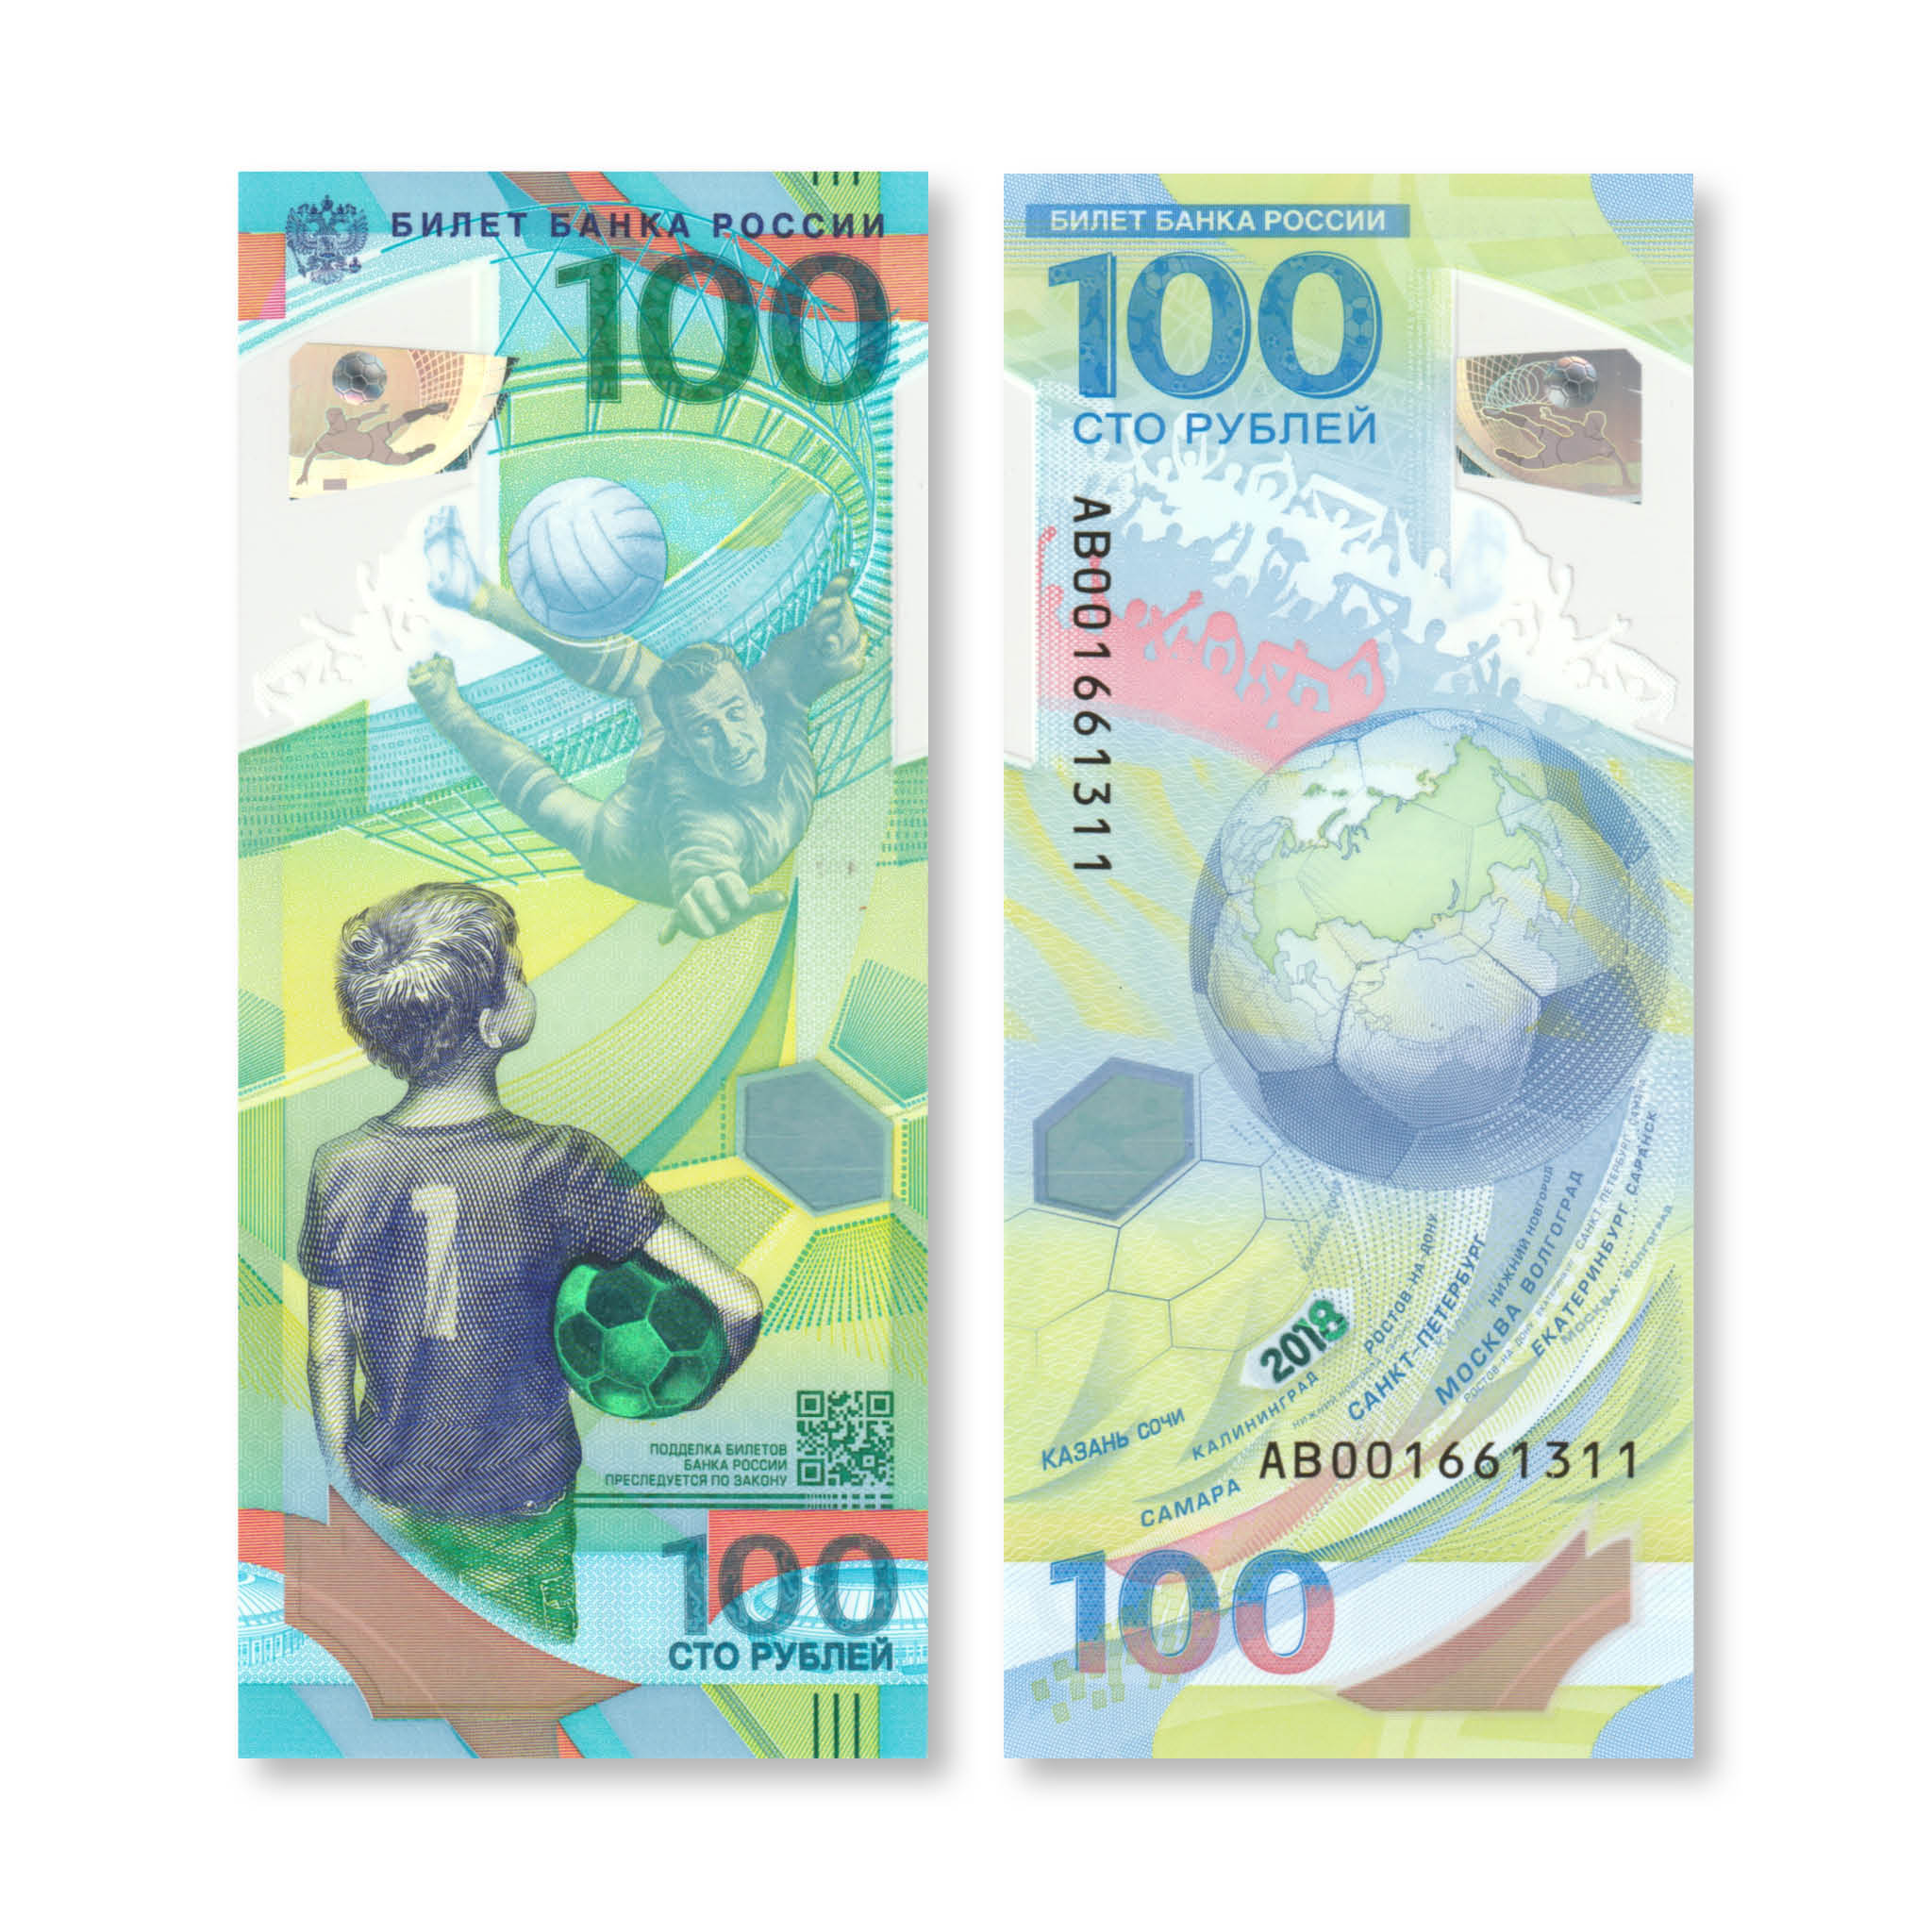 Russia 100 Rubles, 2018, FIFA World Cup Commemorative, B840b, P280, UNC - Robert's World Money - World Banknotes